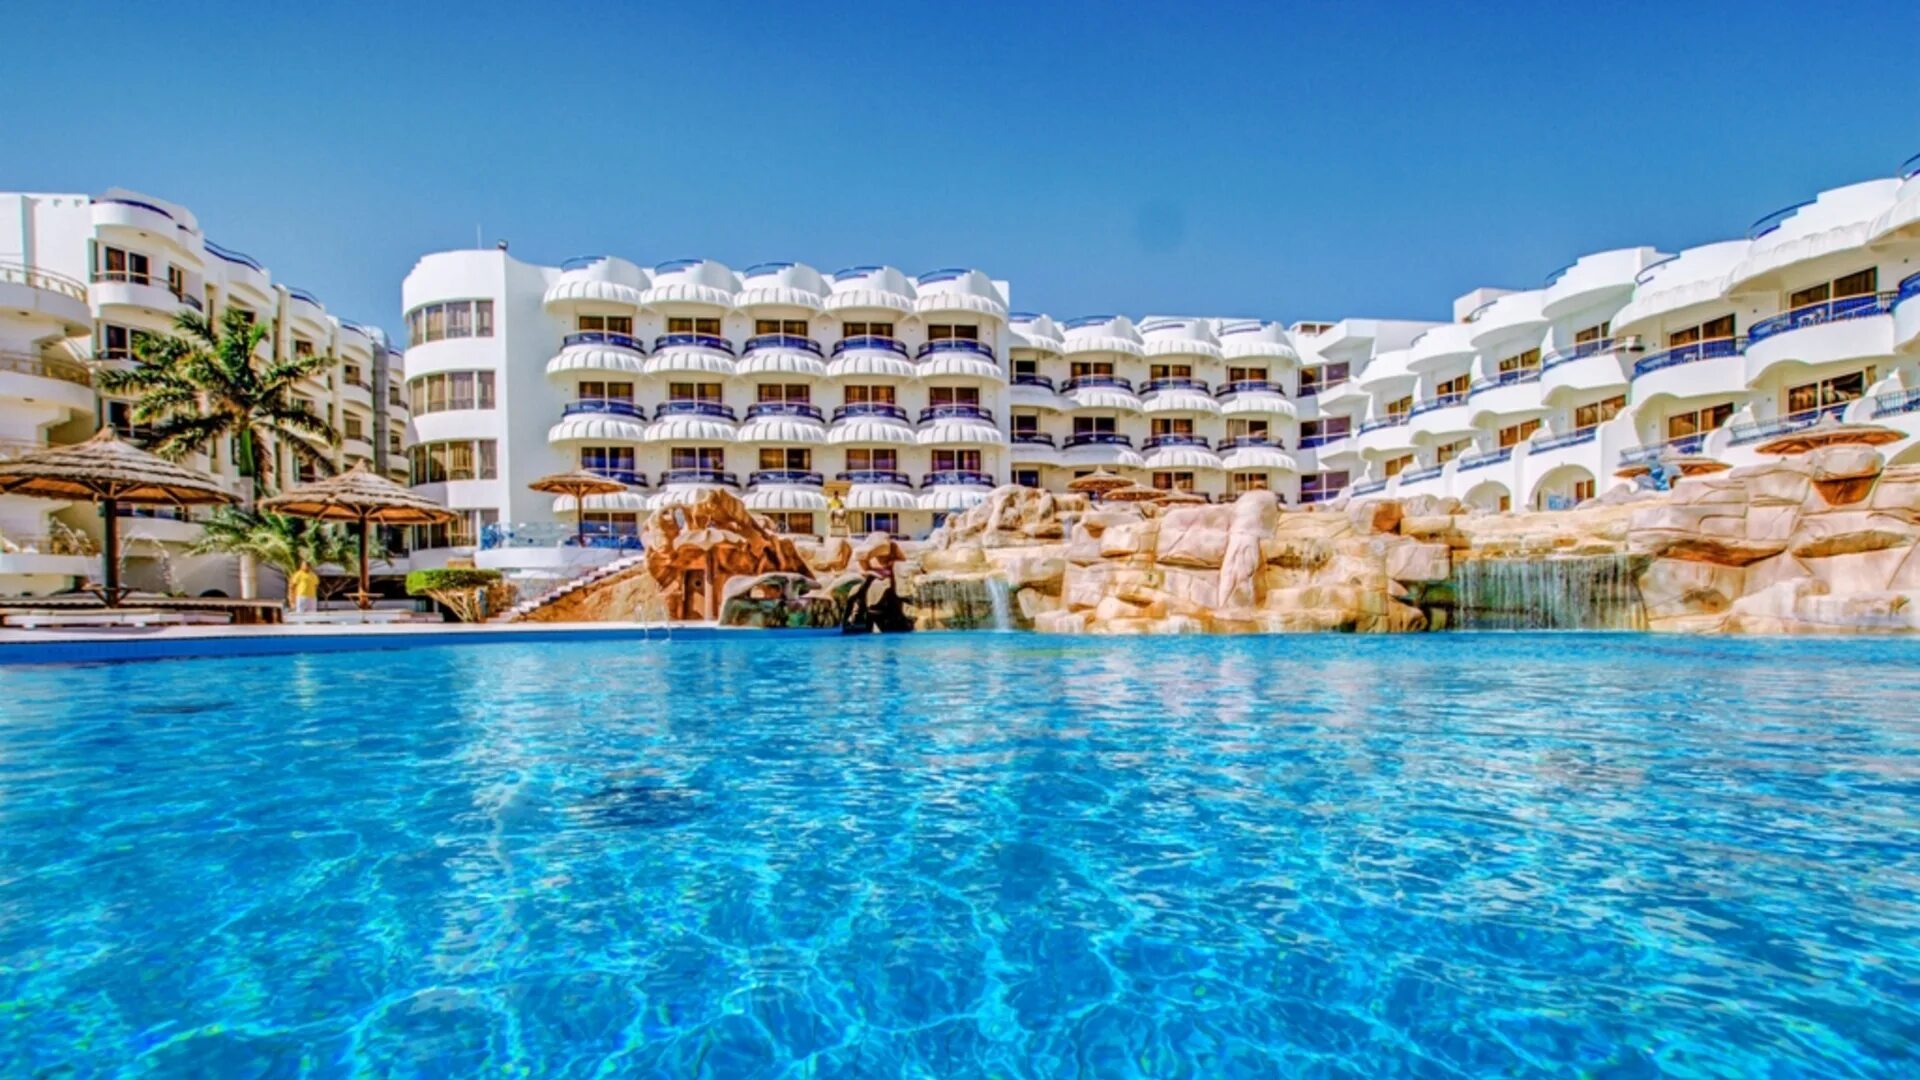 Hurghada seagull resort 4. Отель Sea Gull Beach Resort & Club 4*. Sea Gull 4 Египет. Отель Seagull Beach Resort Hurghada. Сигал Бич Резорт 4 Хургада.